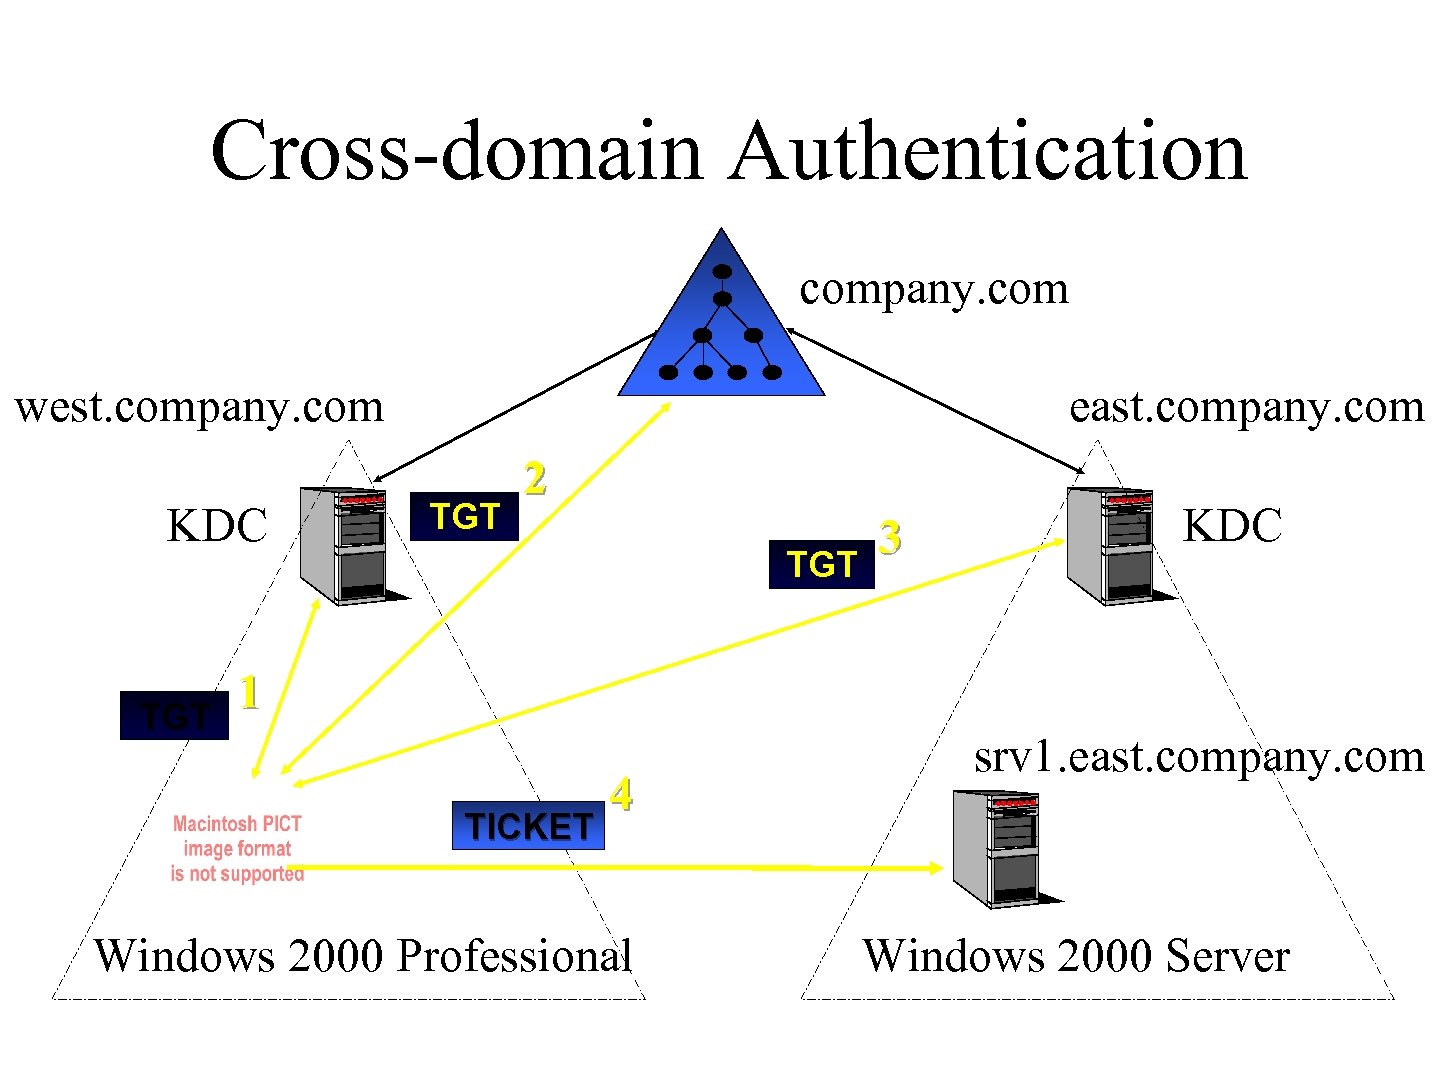 Cross-domain Authentication company. com west. company. com KDC TGT east. company. com TGT 2